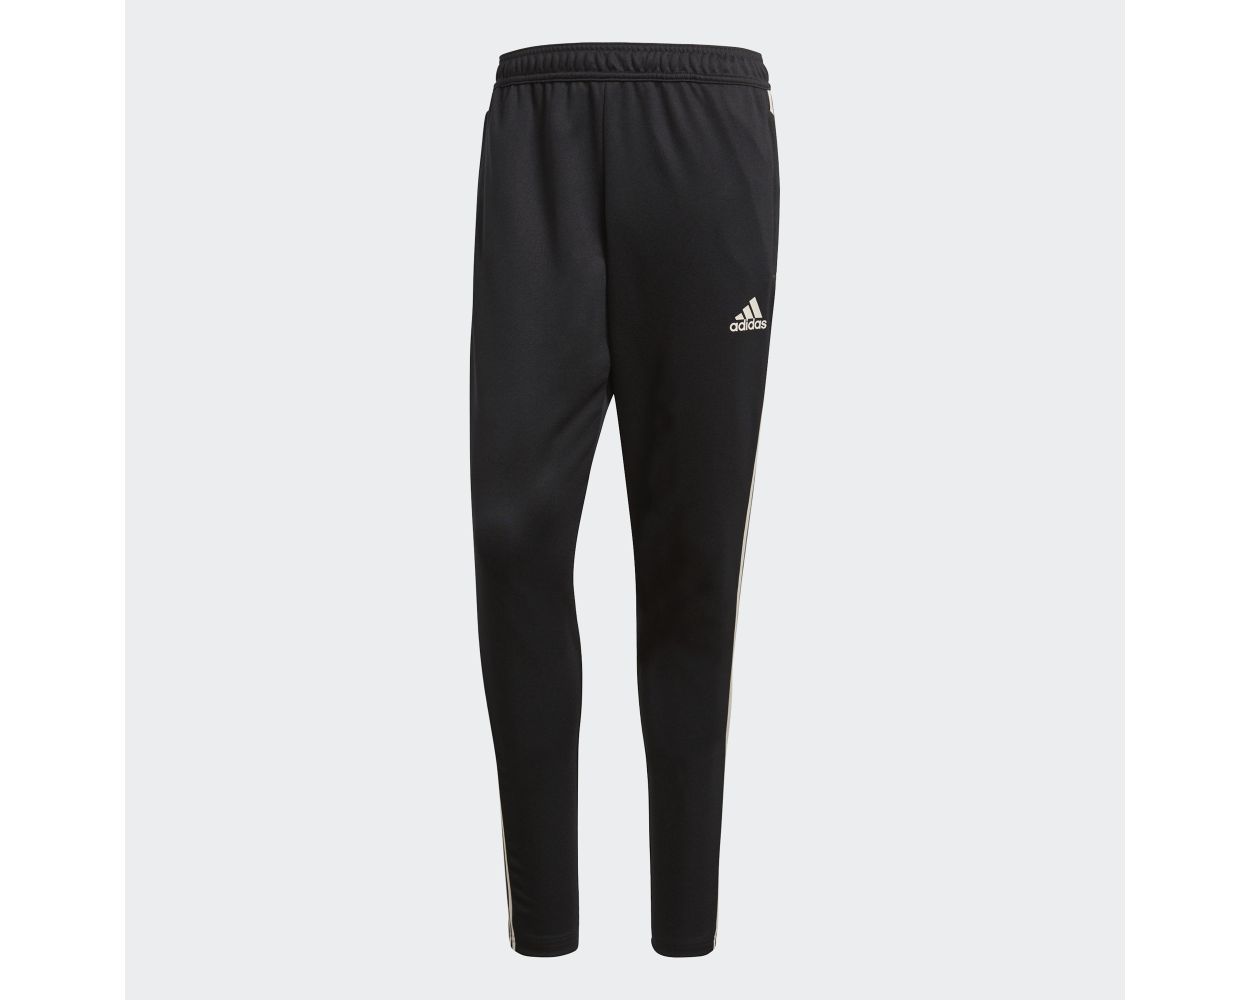 NWT Adidas D4T Training Pants Men's Gym Running Everyday Bottoms Silver Sz  S | eBay